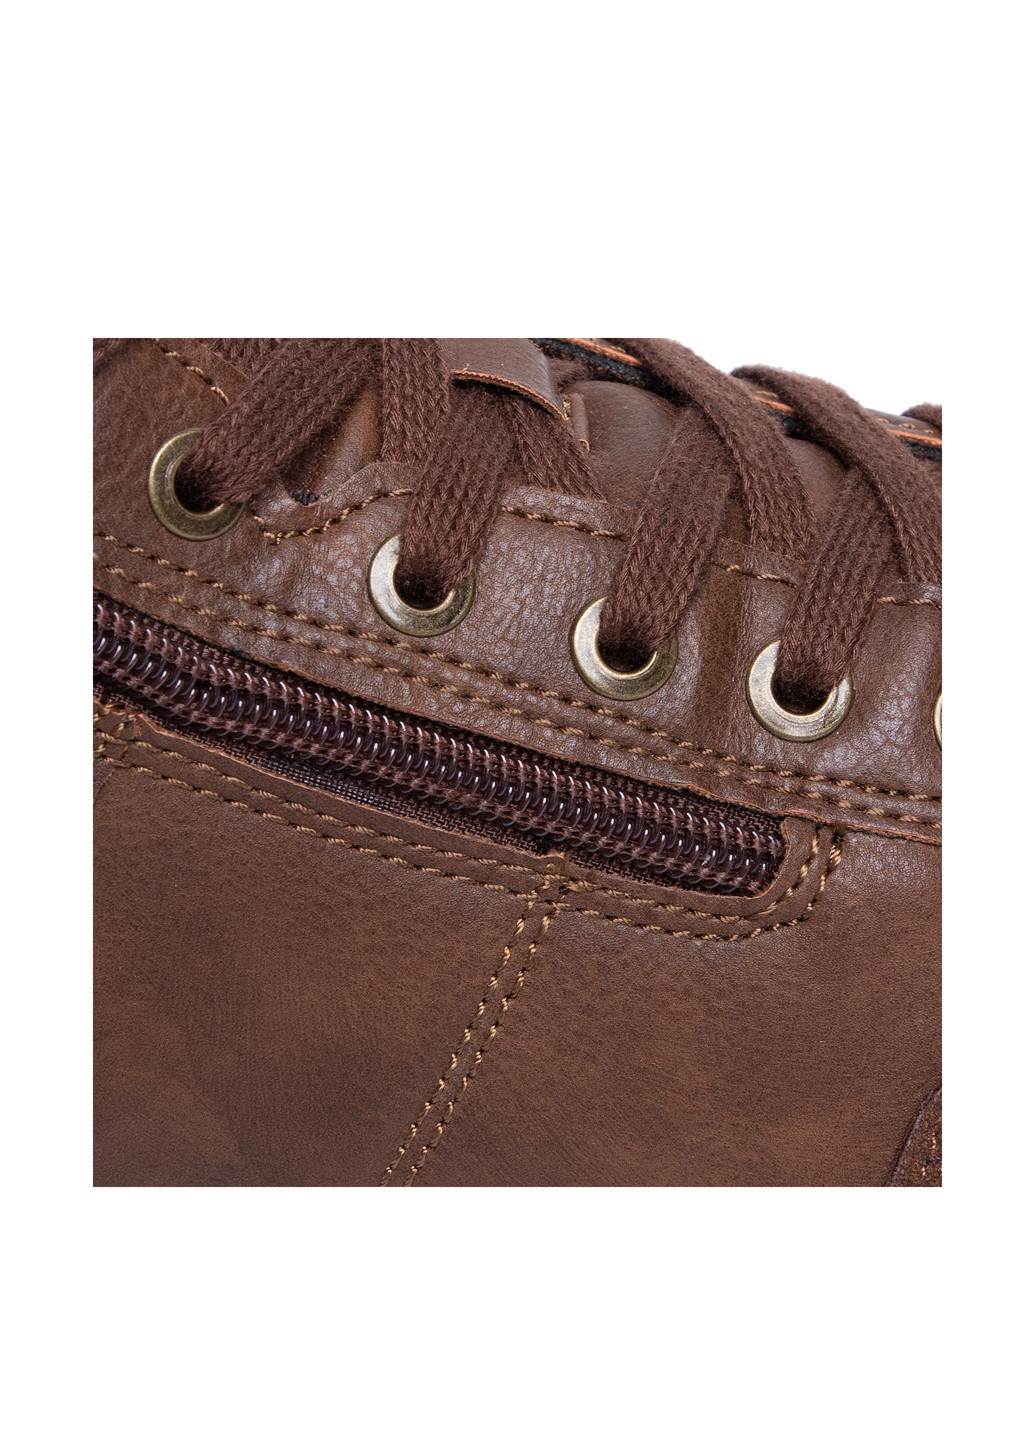 Коричневые осенние черевики mp07-91339-01 Lanetti